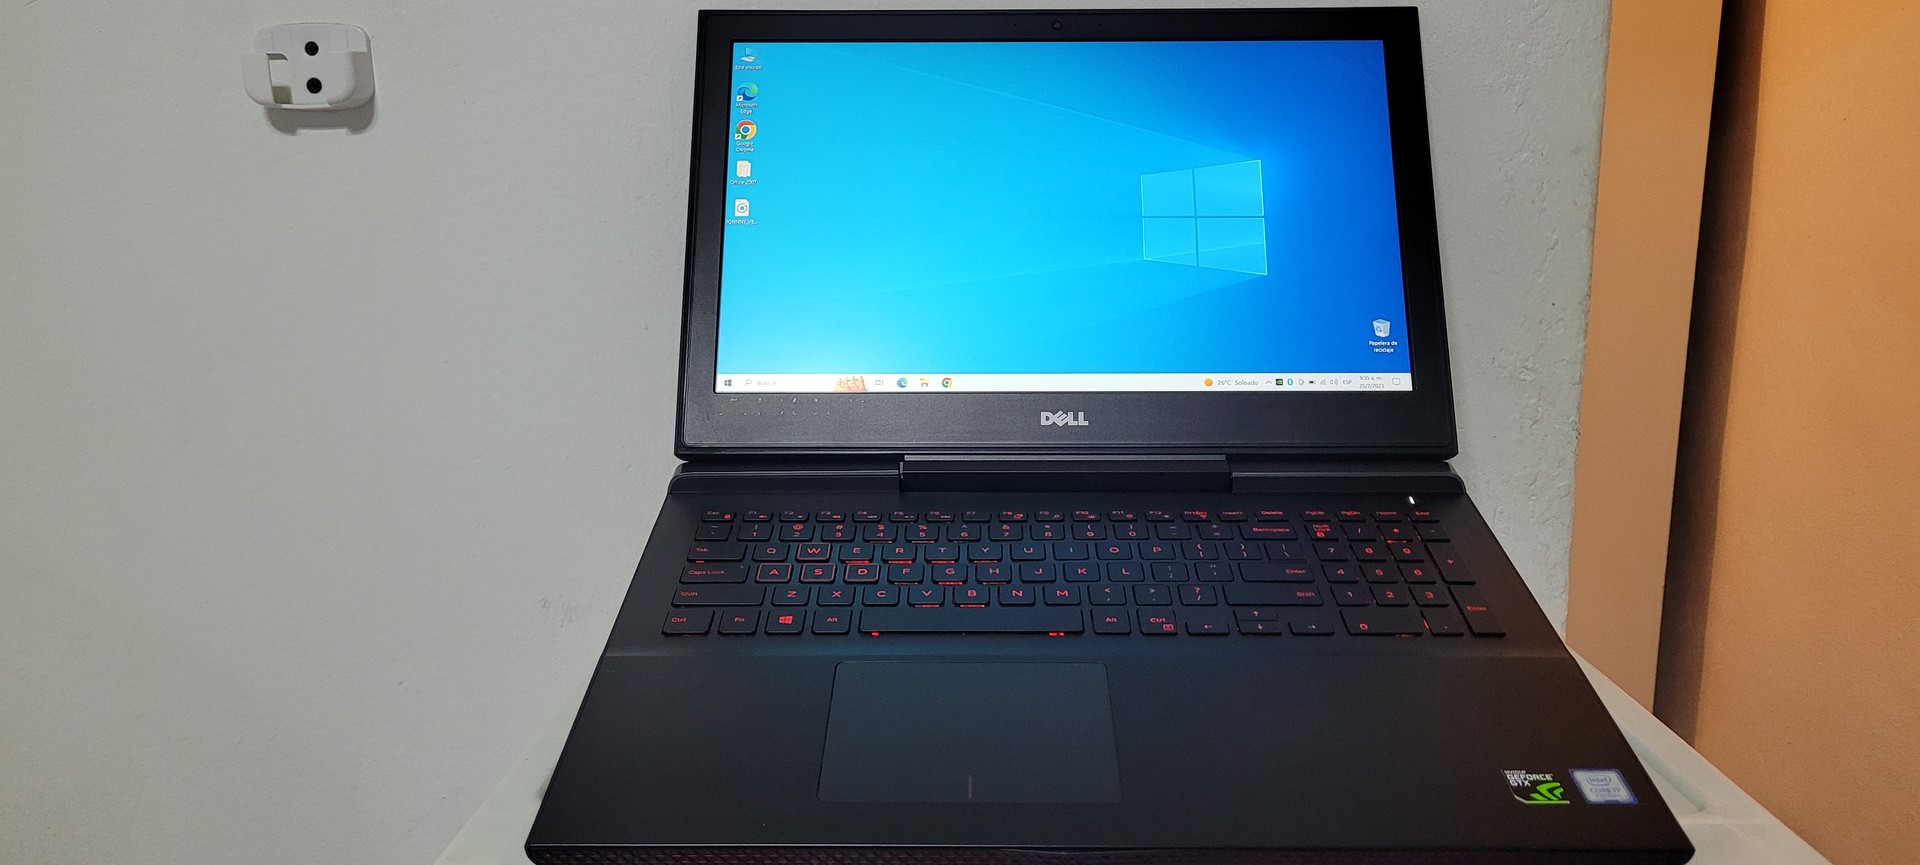 computadoras y laptops - Laptop Dell Gaming Core i7 7ma Ram 16gb Nvidea Gtx 1050Ti 12gb 1